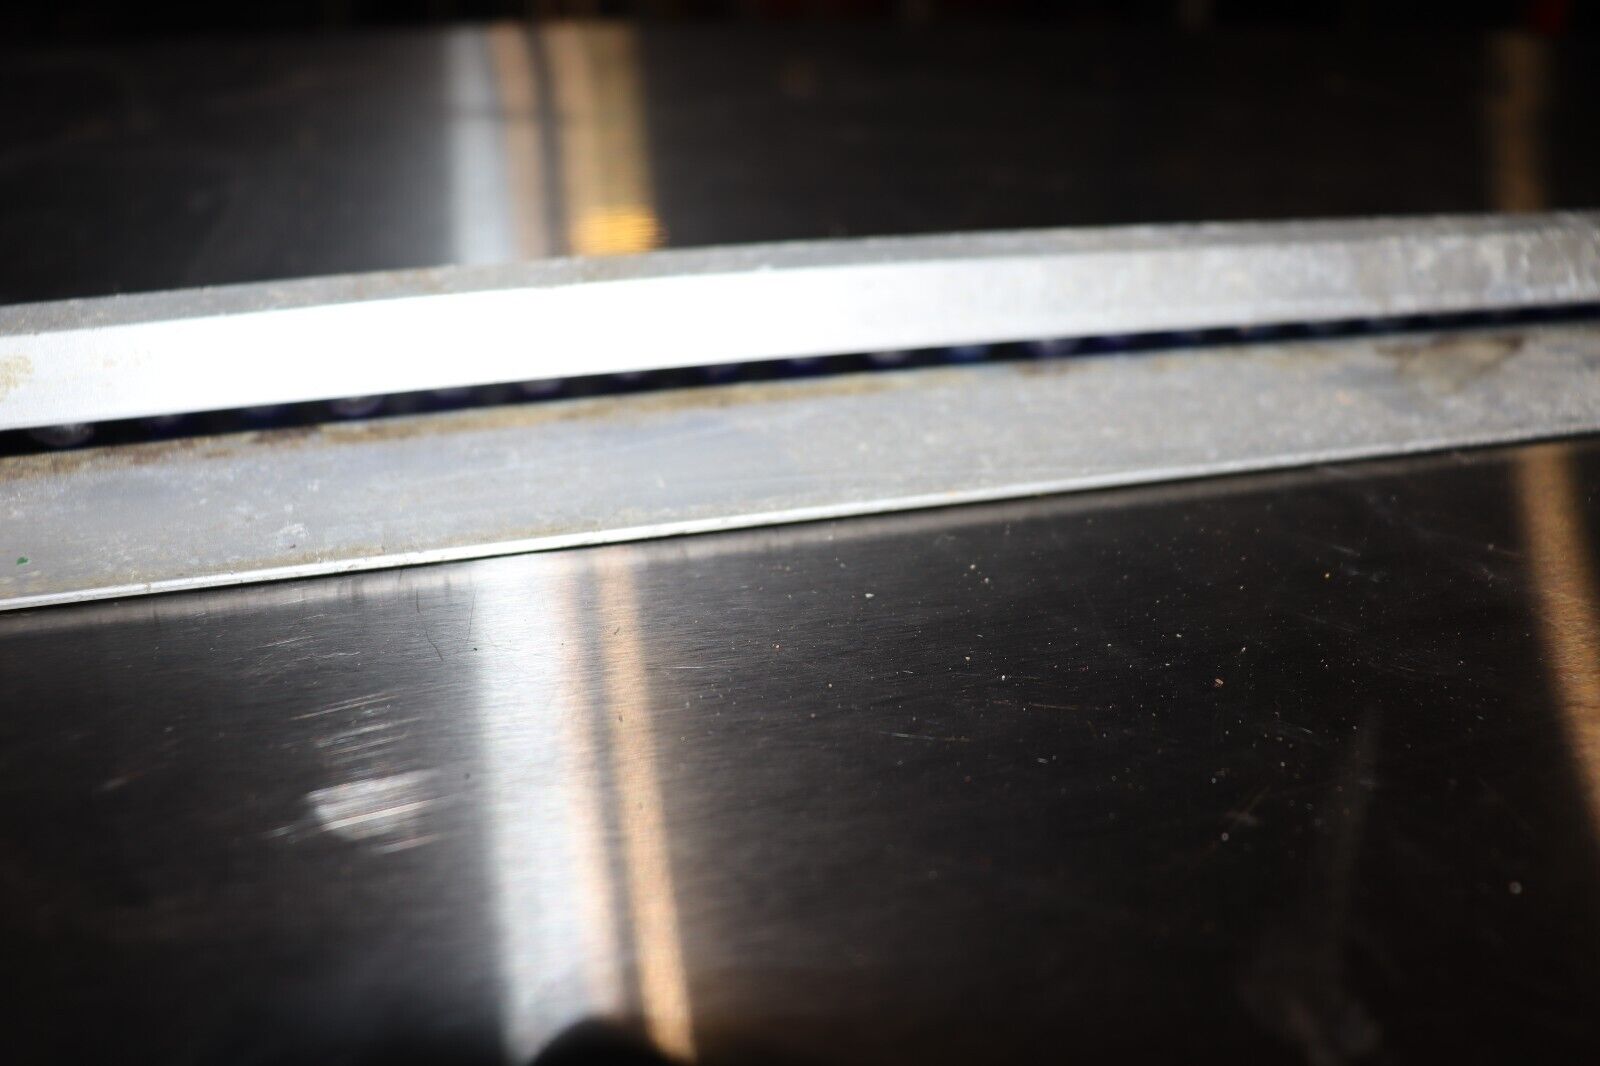 Restaurant Kitchen Ticket Check Order Holder Bar Slide Rail Stainless Steel 48 Inch